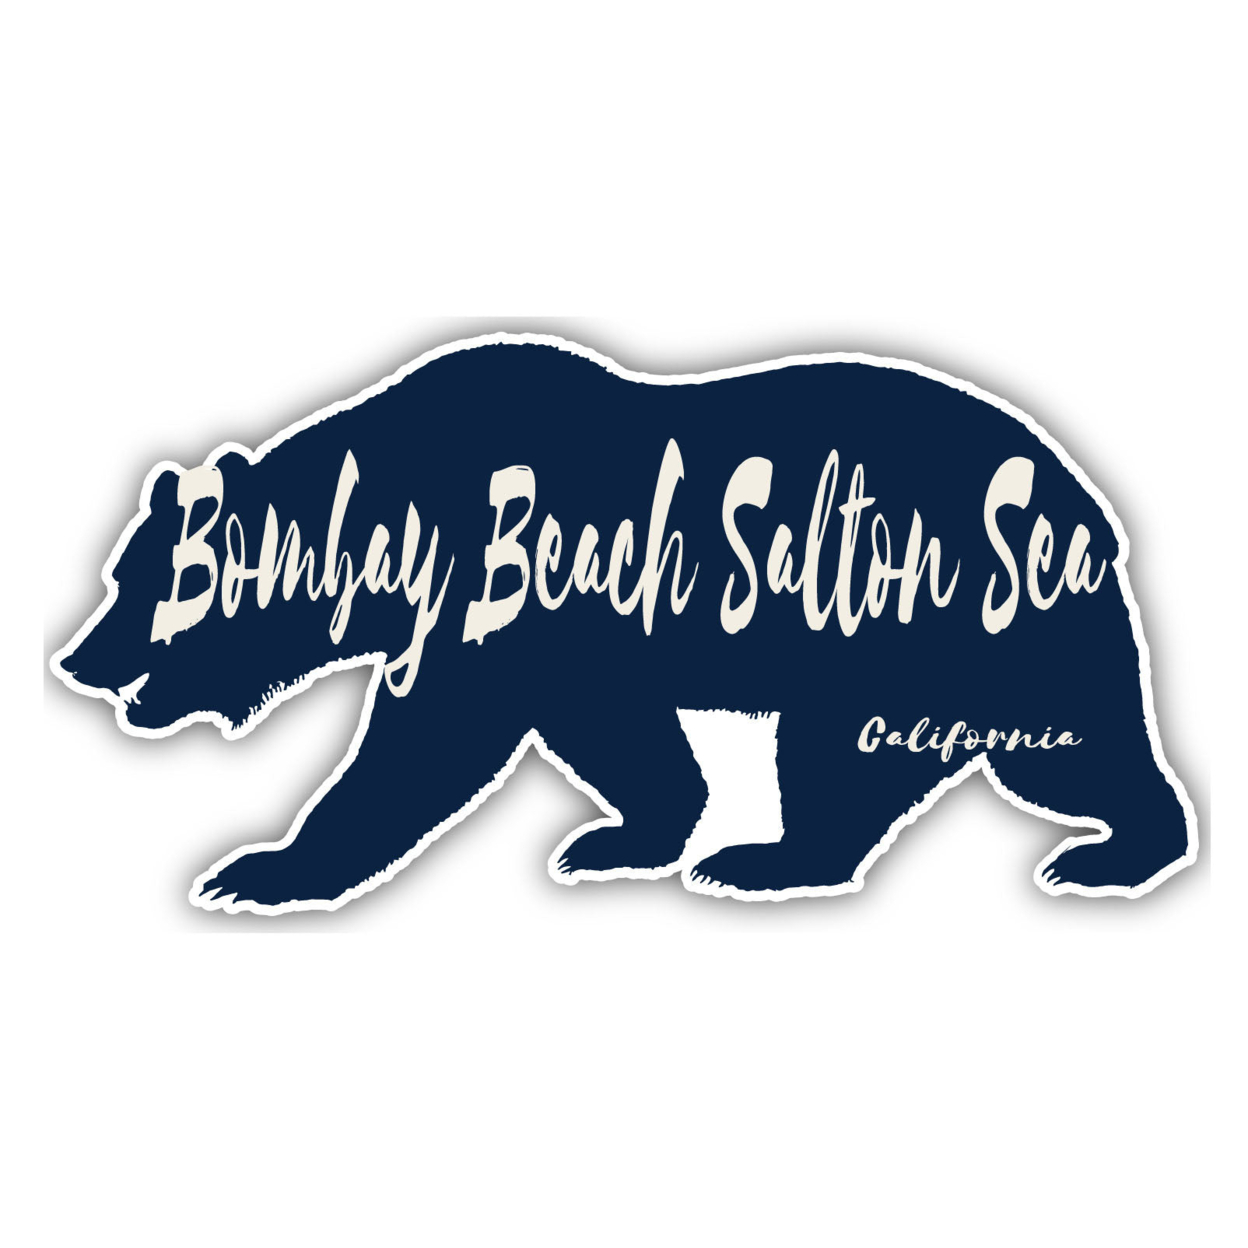 Bombay Beach Salton Sea California Souvenir Decorative Stickers (Choose Theme And Size) - Single Unit, 10-Inch, Bear